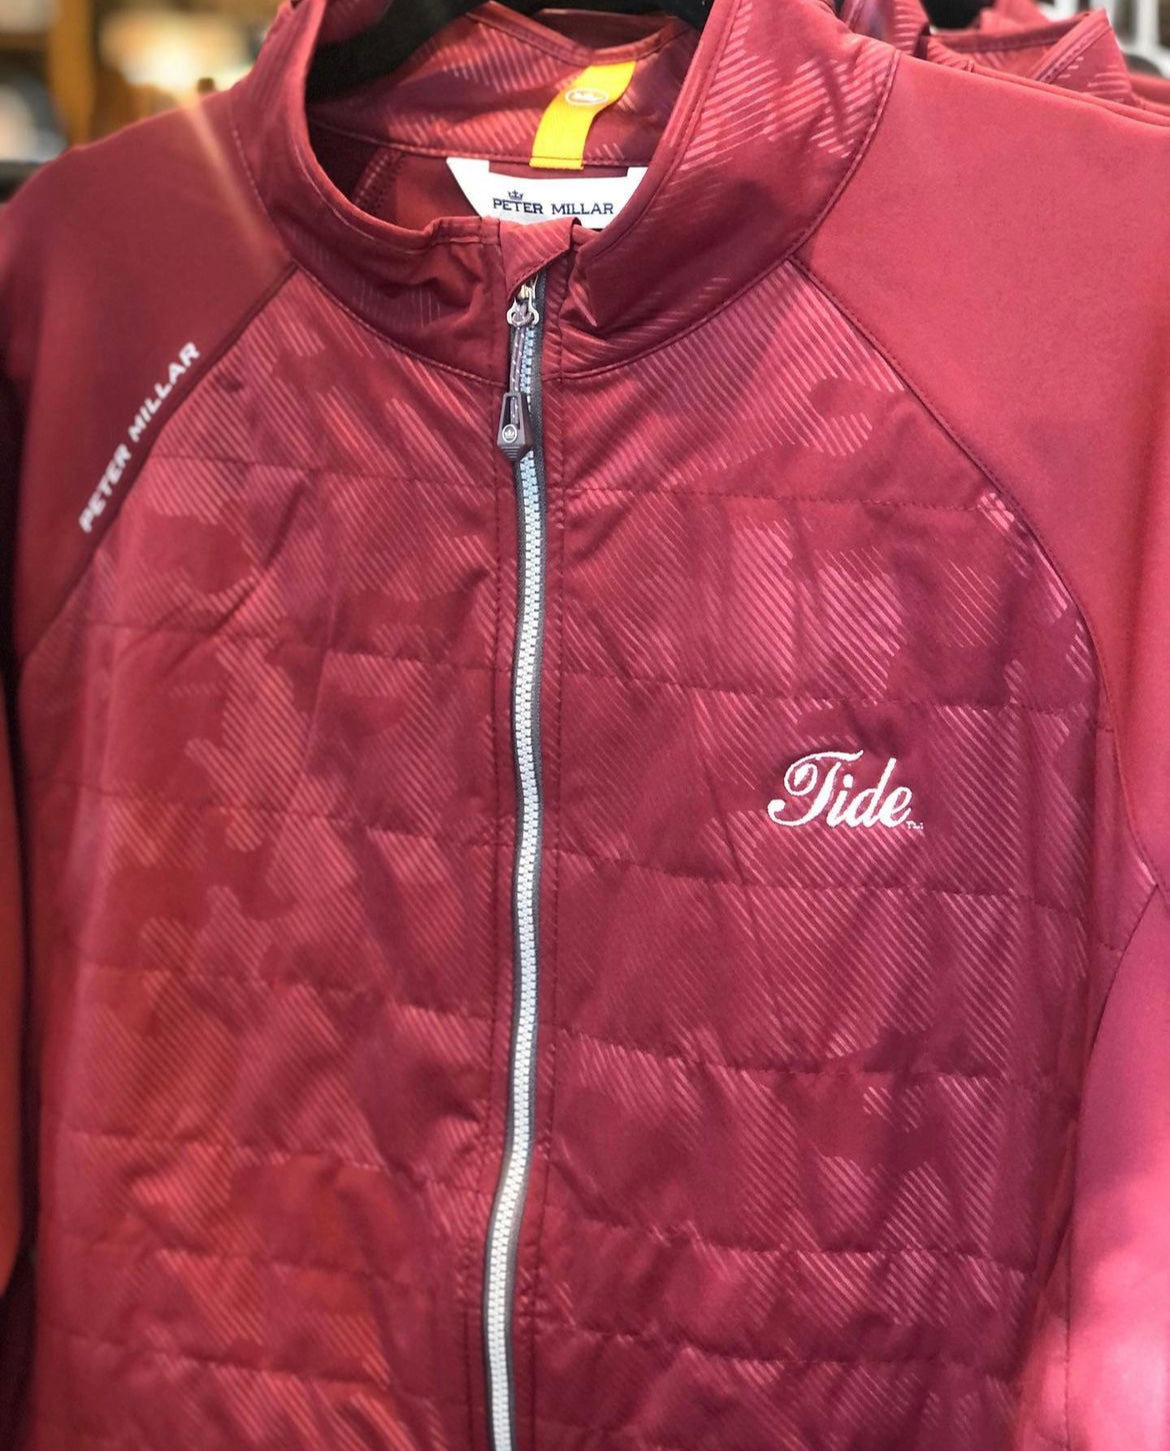 Peter Millar Merge Camo Full Zip Jacket with Tide Logo